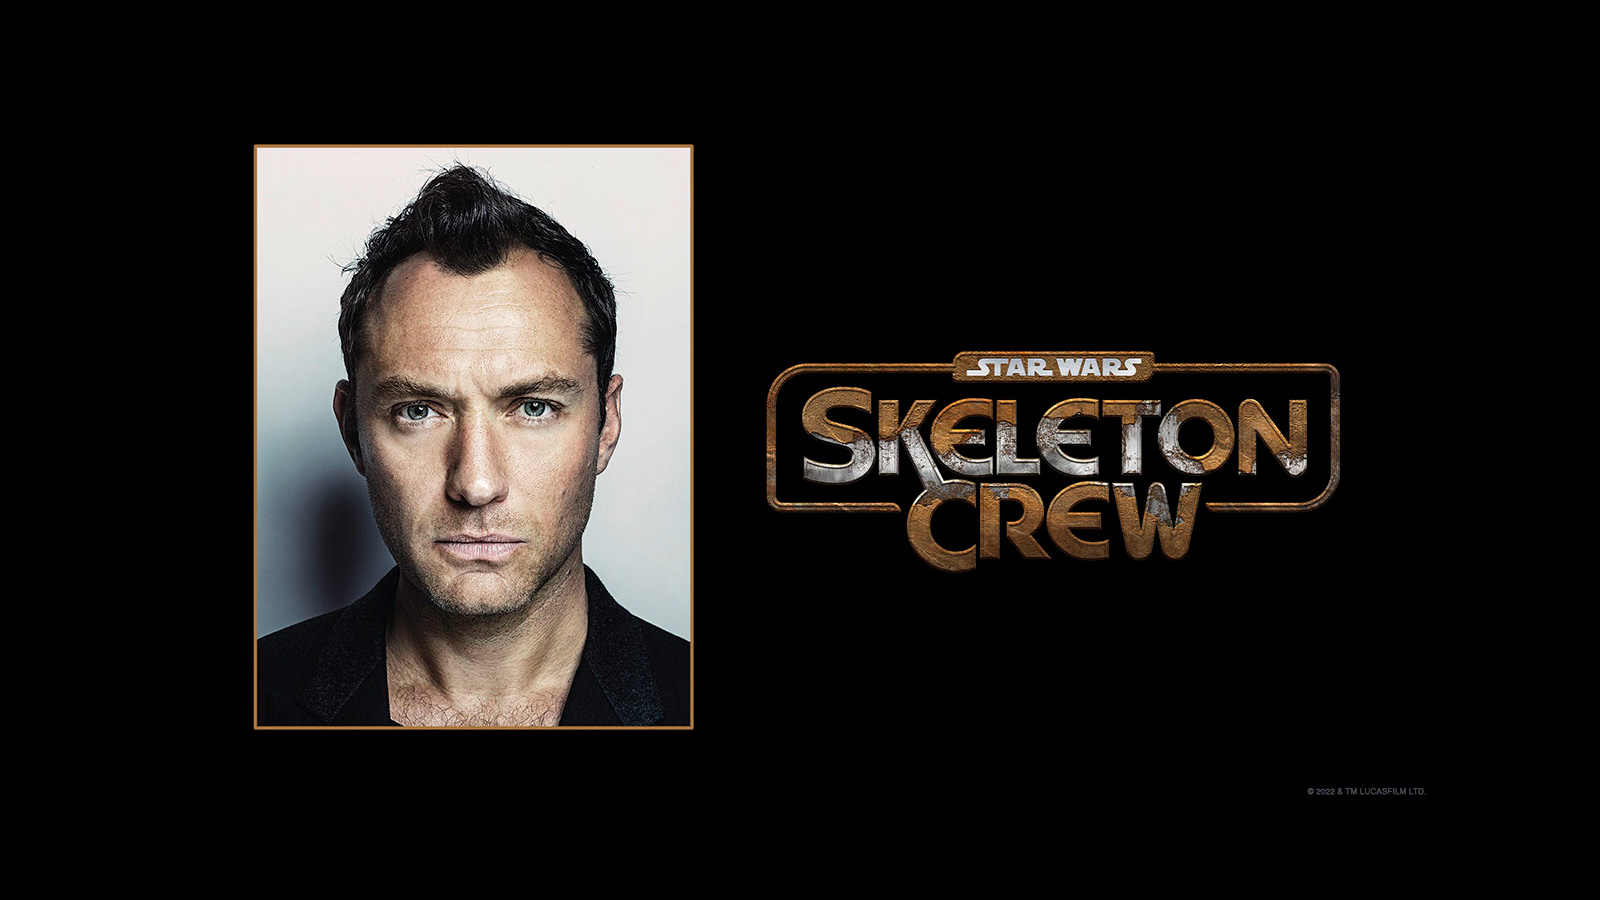 New Disney+ Series Revealed - Star Wars Skeleton Crew